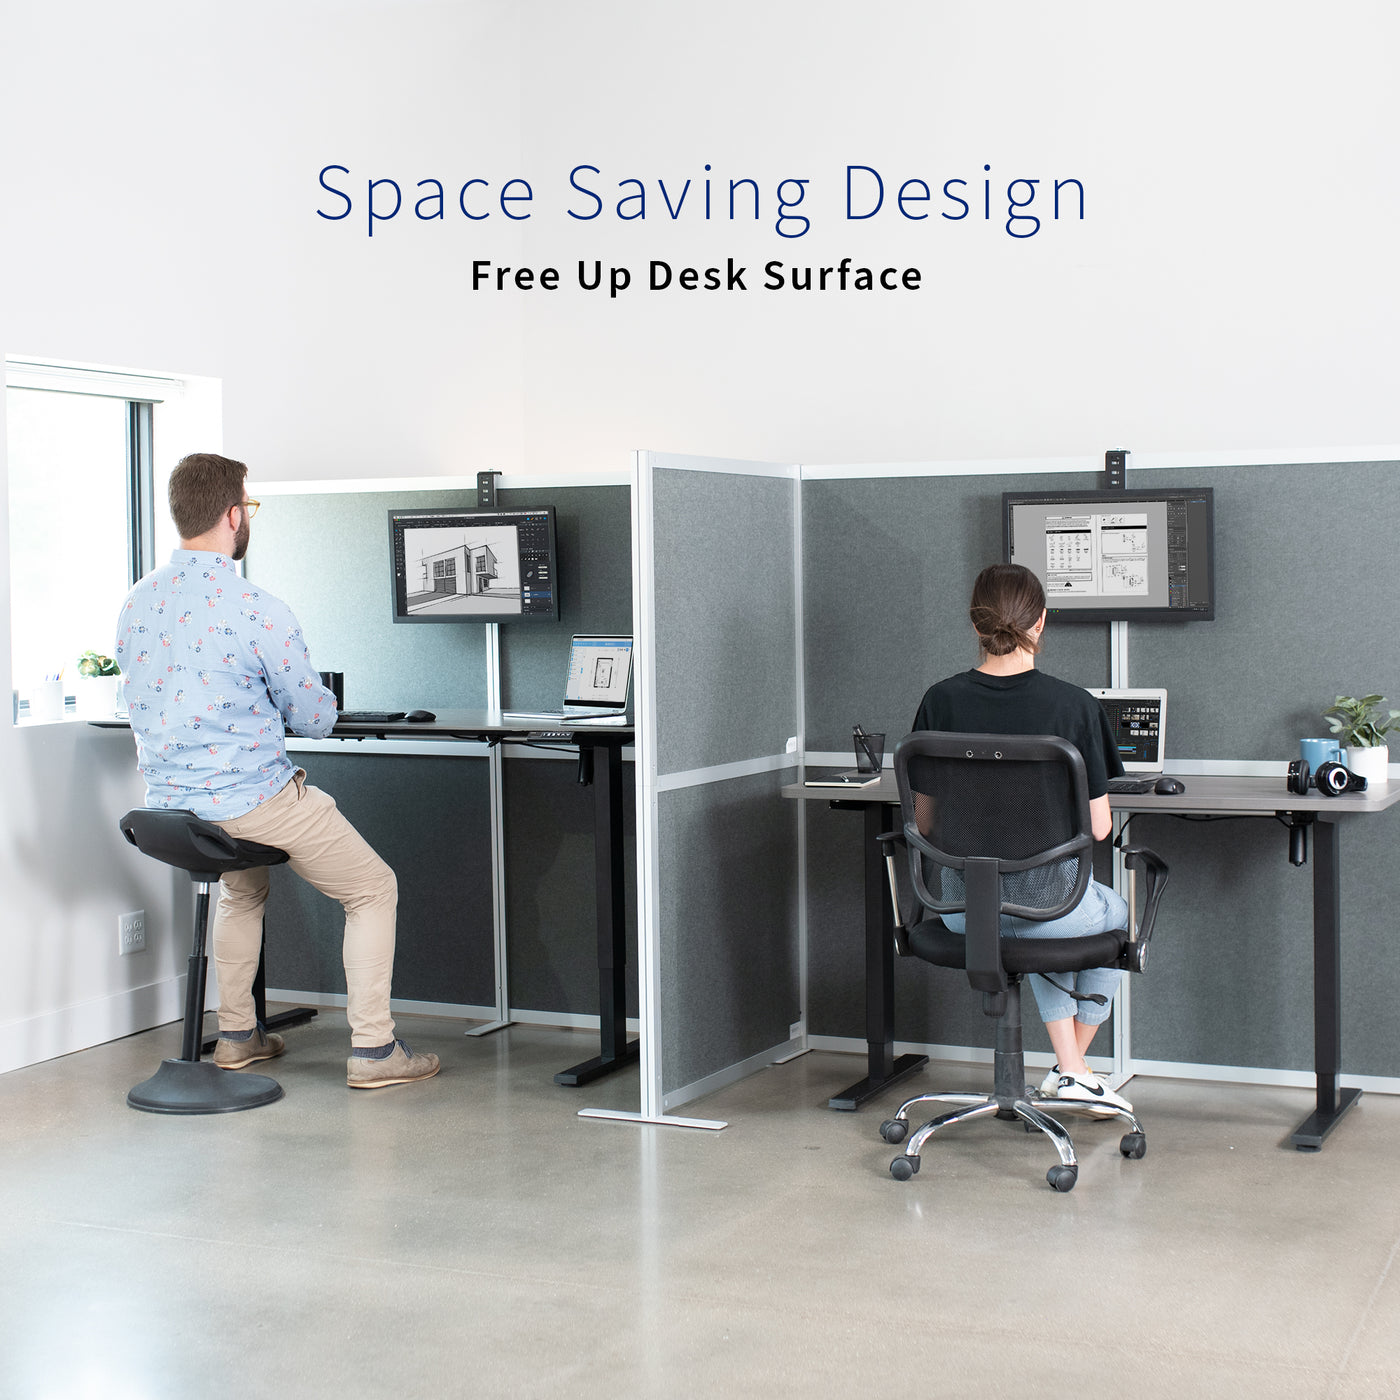 Space saving design of cubicle monitor mounts saving desk surface space.